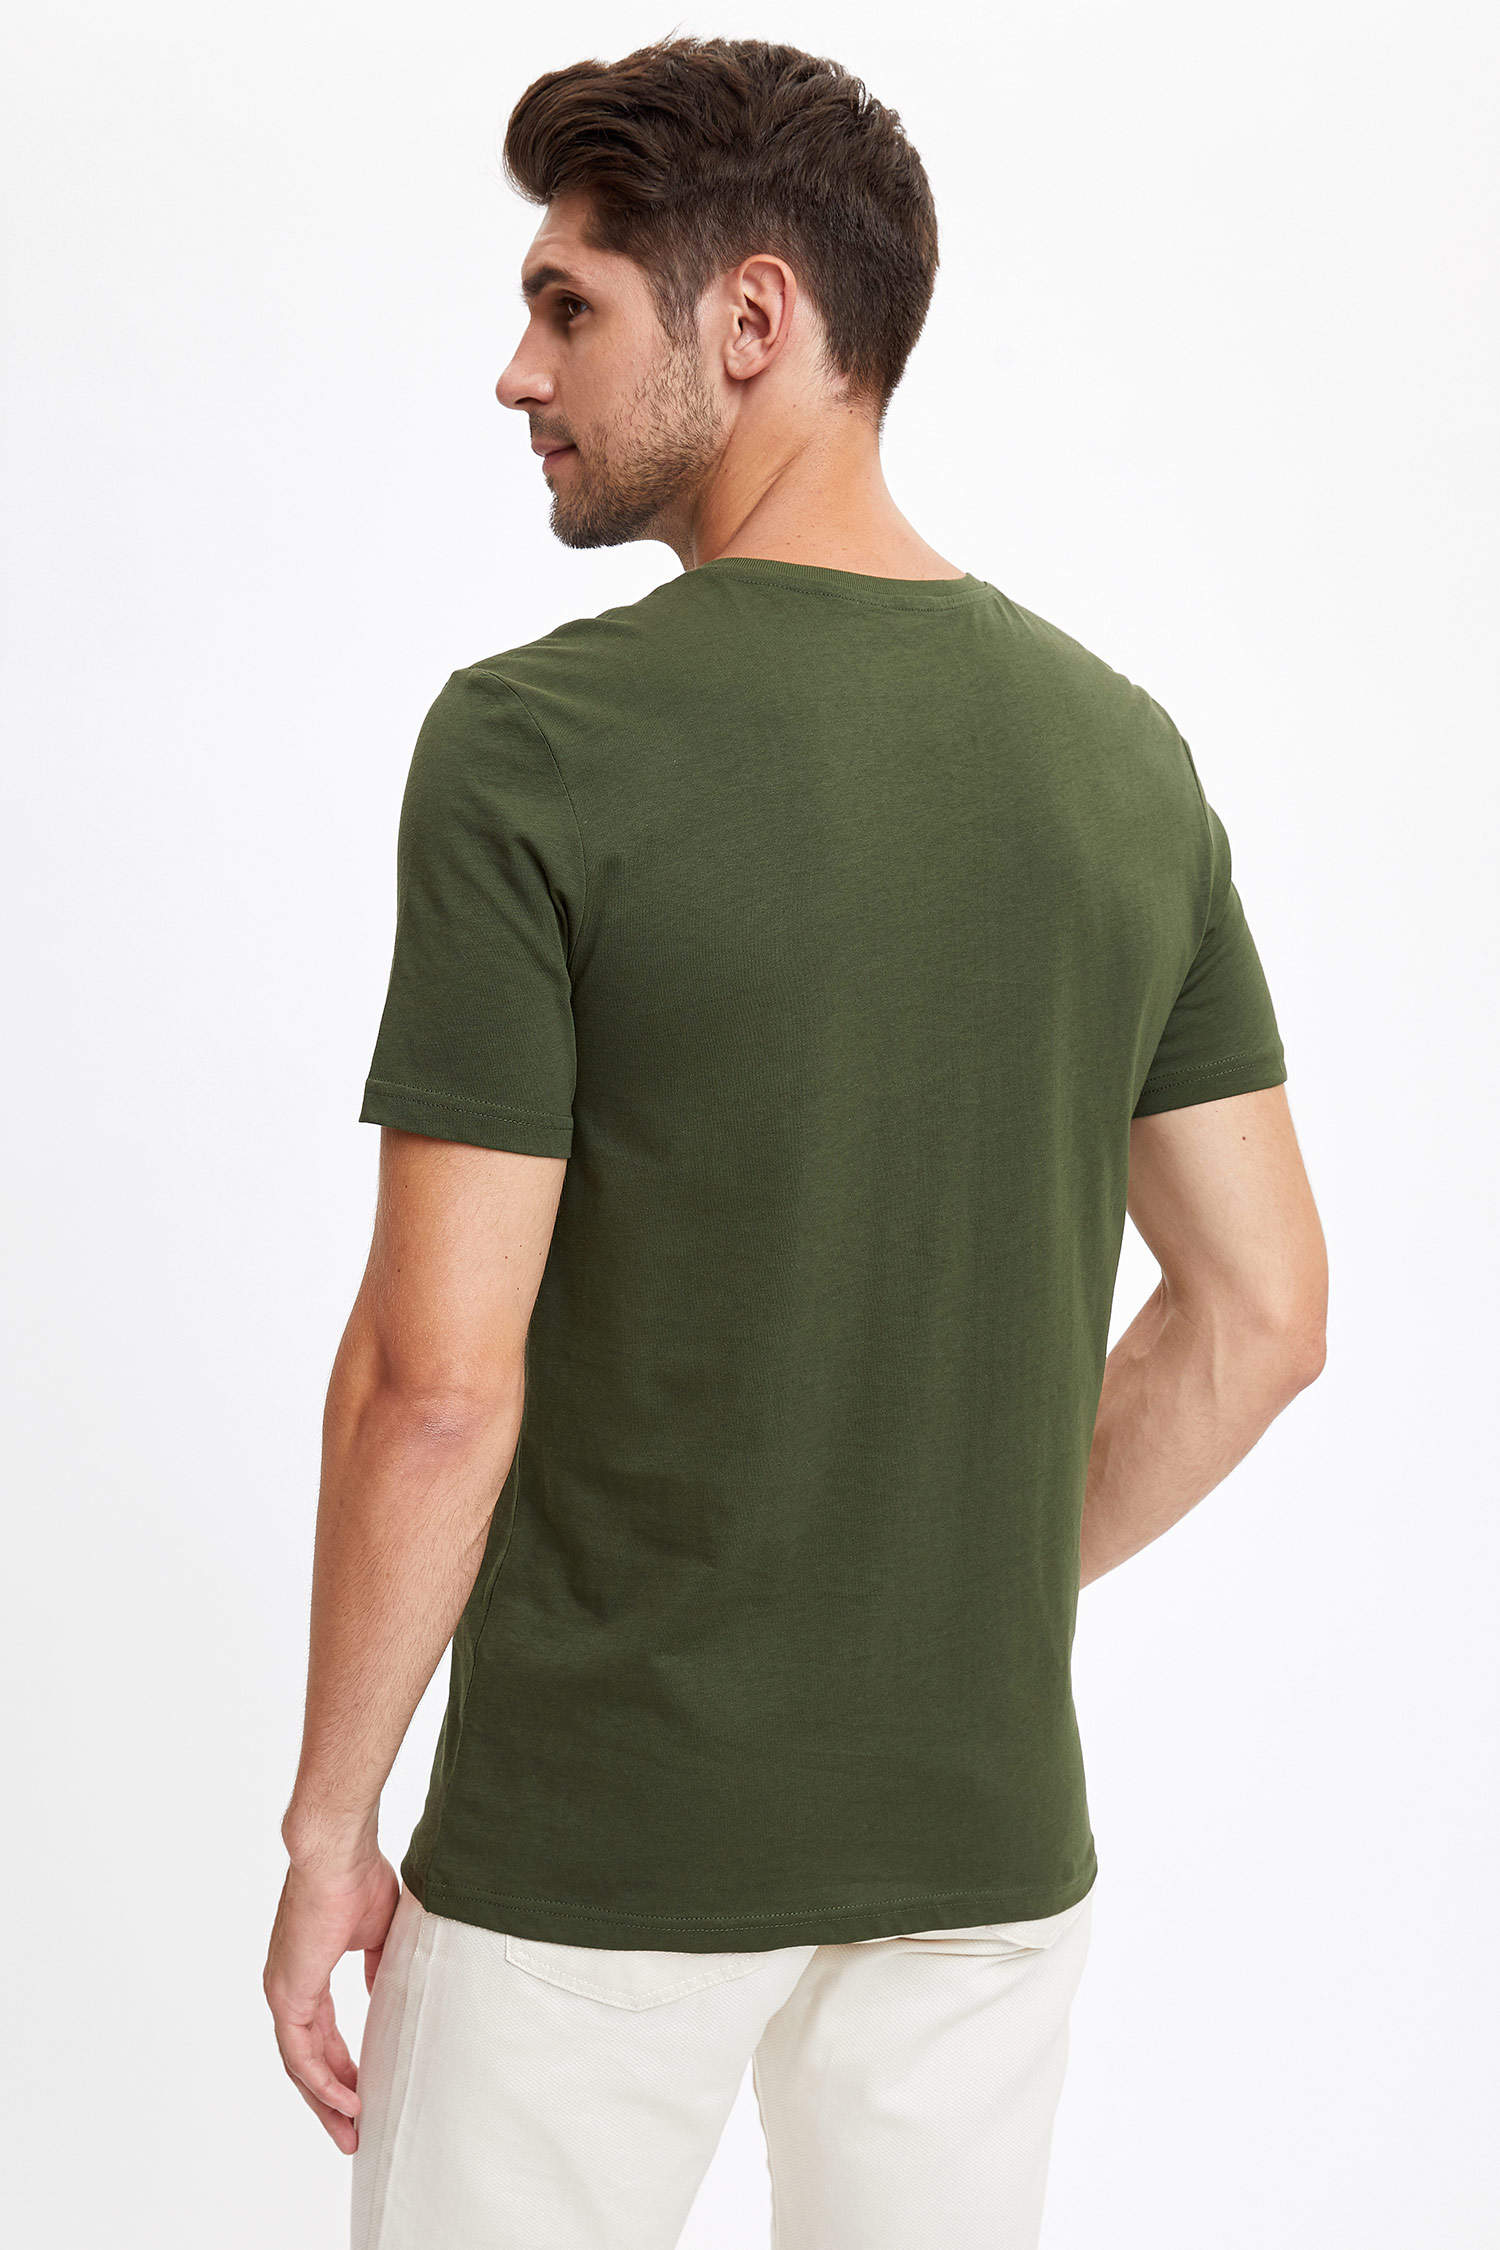 Khaki MAN Slim Fit V-Neck T-Shirt 1443801 | DeFacto